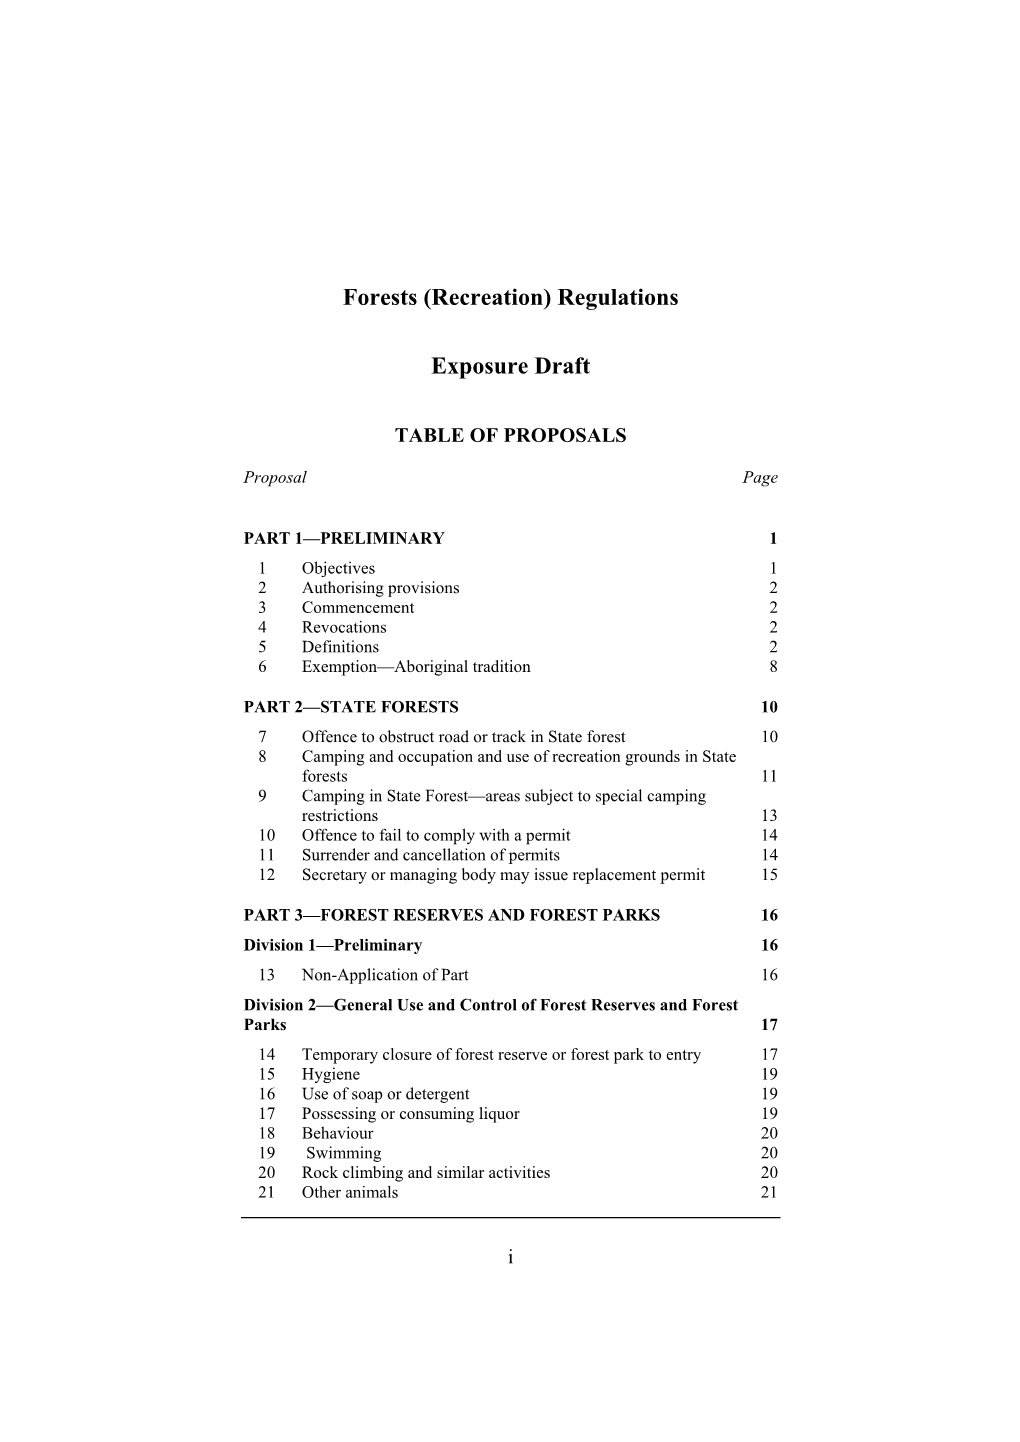 Forests (Recreation) Regulations Exposure Draft